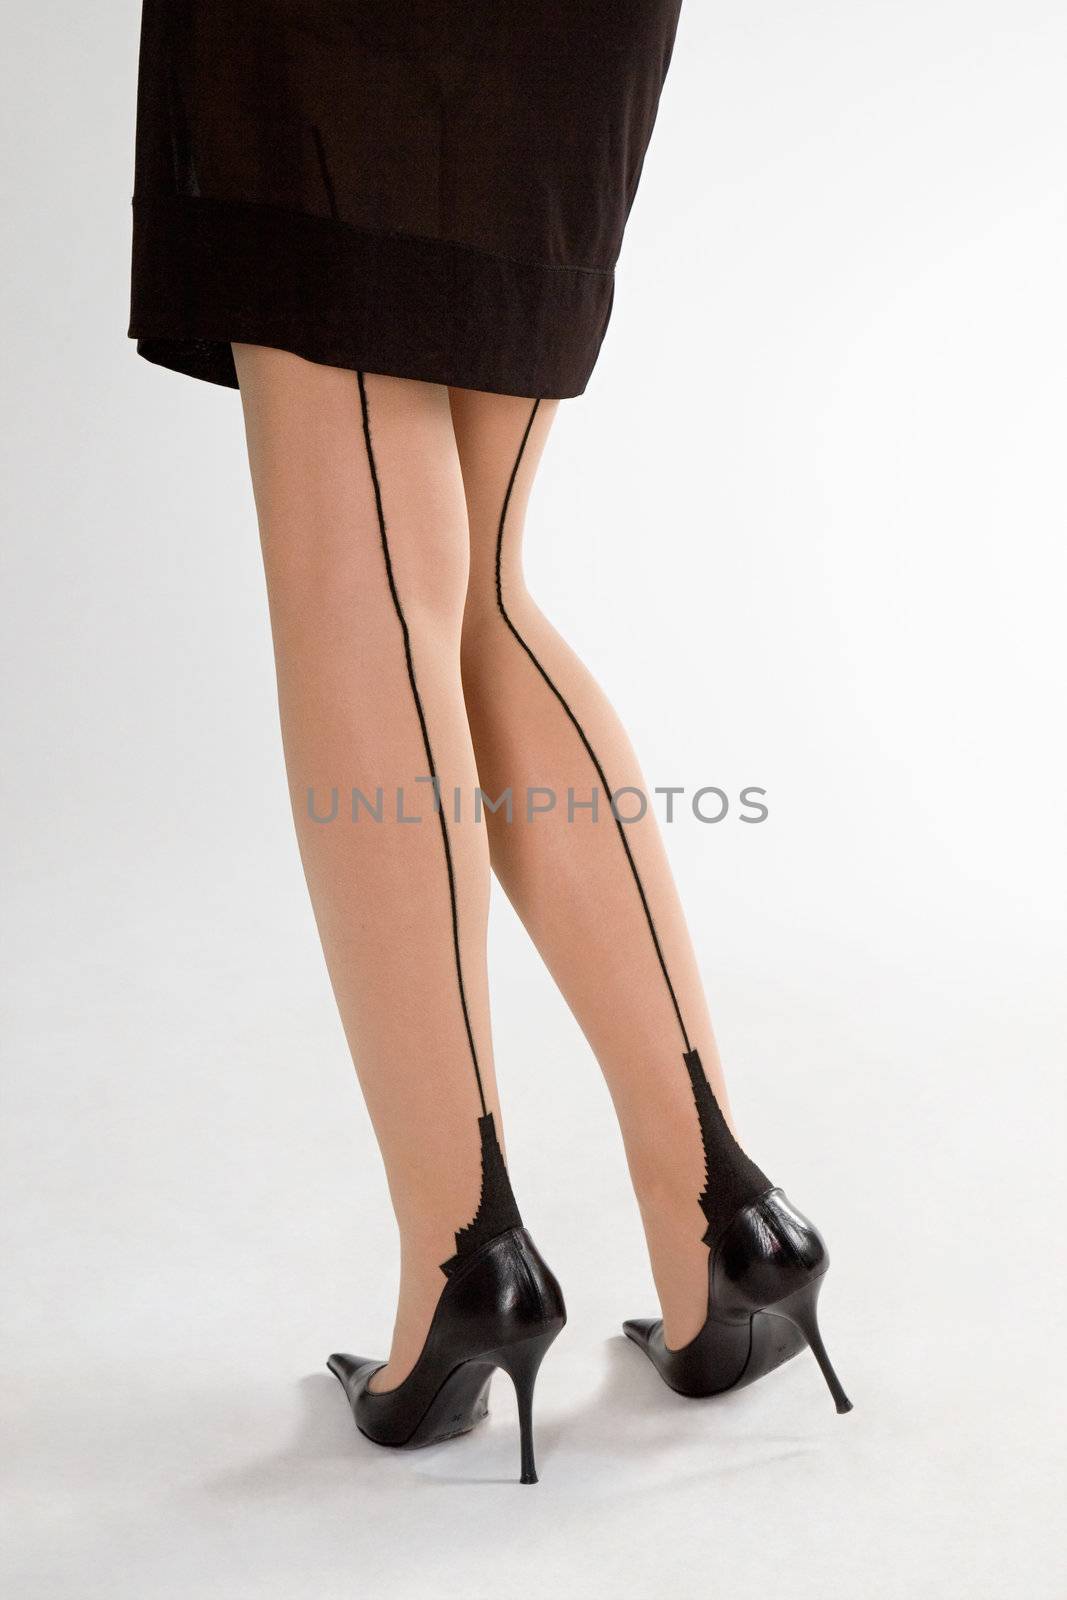 Glamour legs 10 by fotorobs